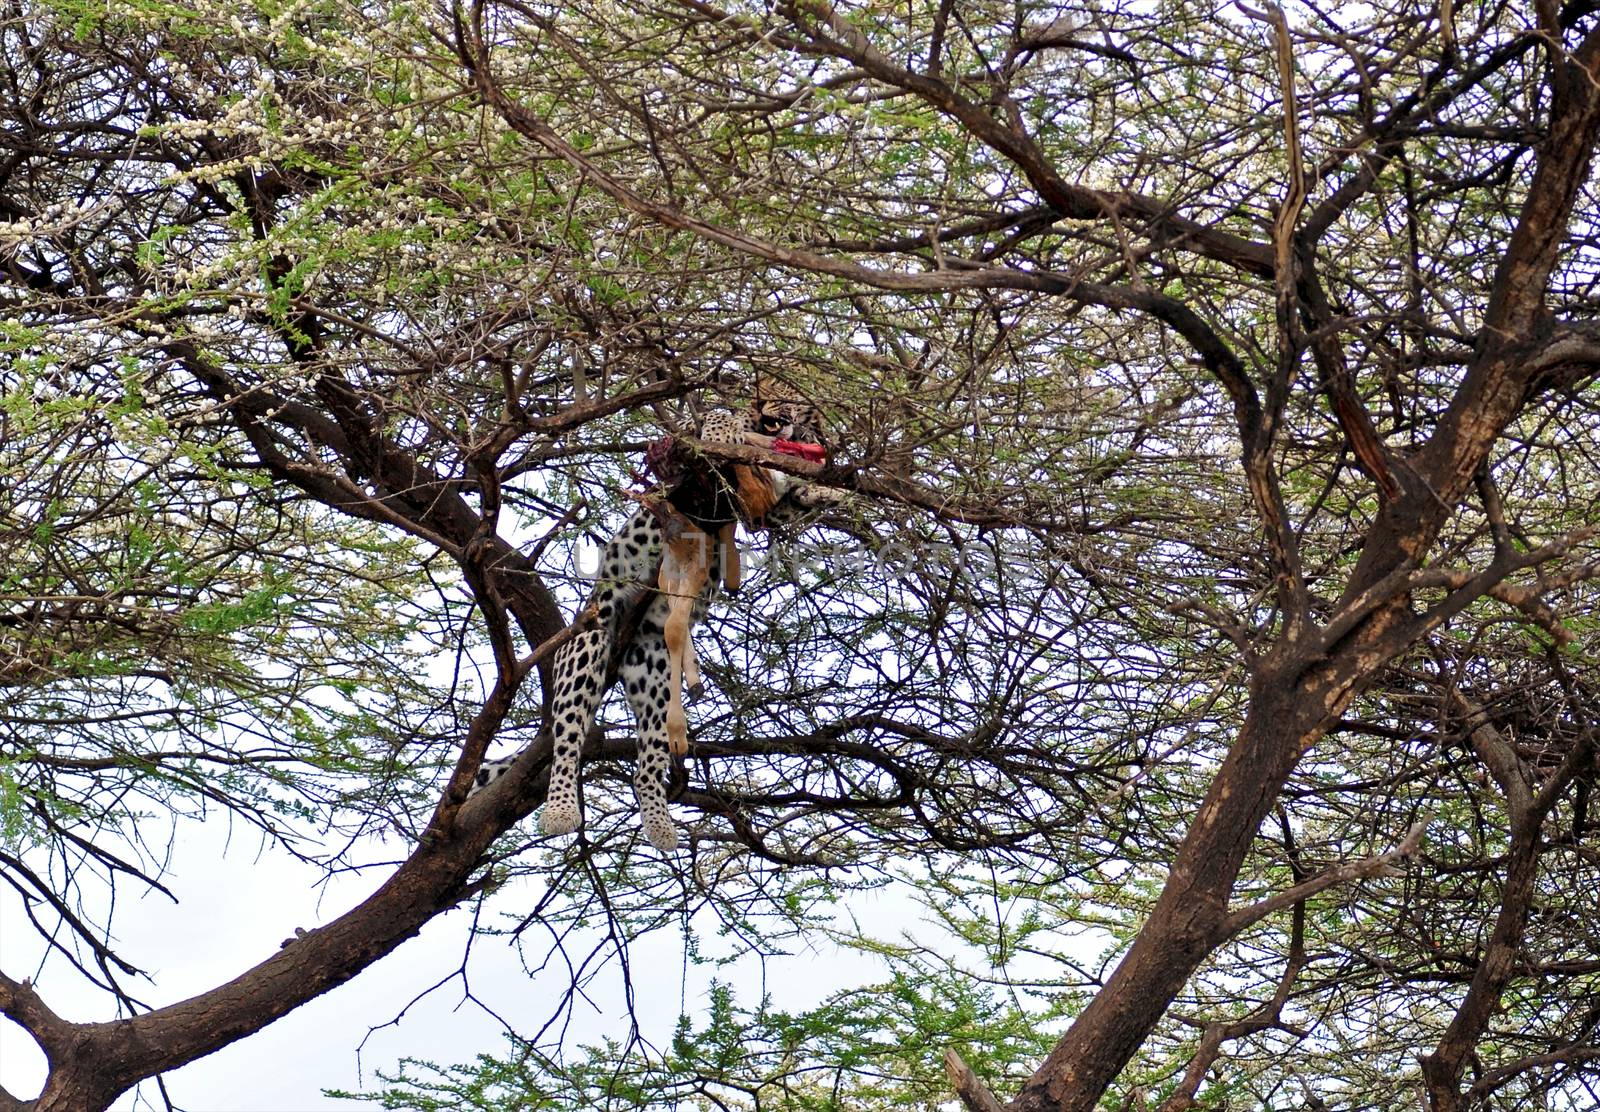 leopard in National Park in Tanzania